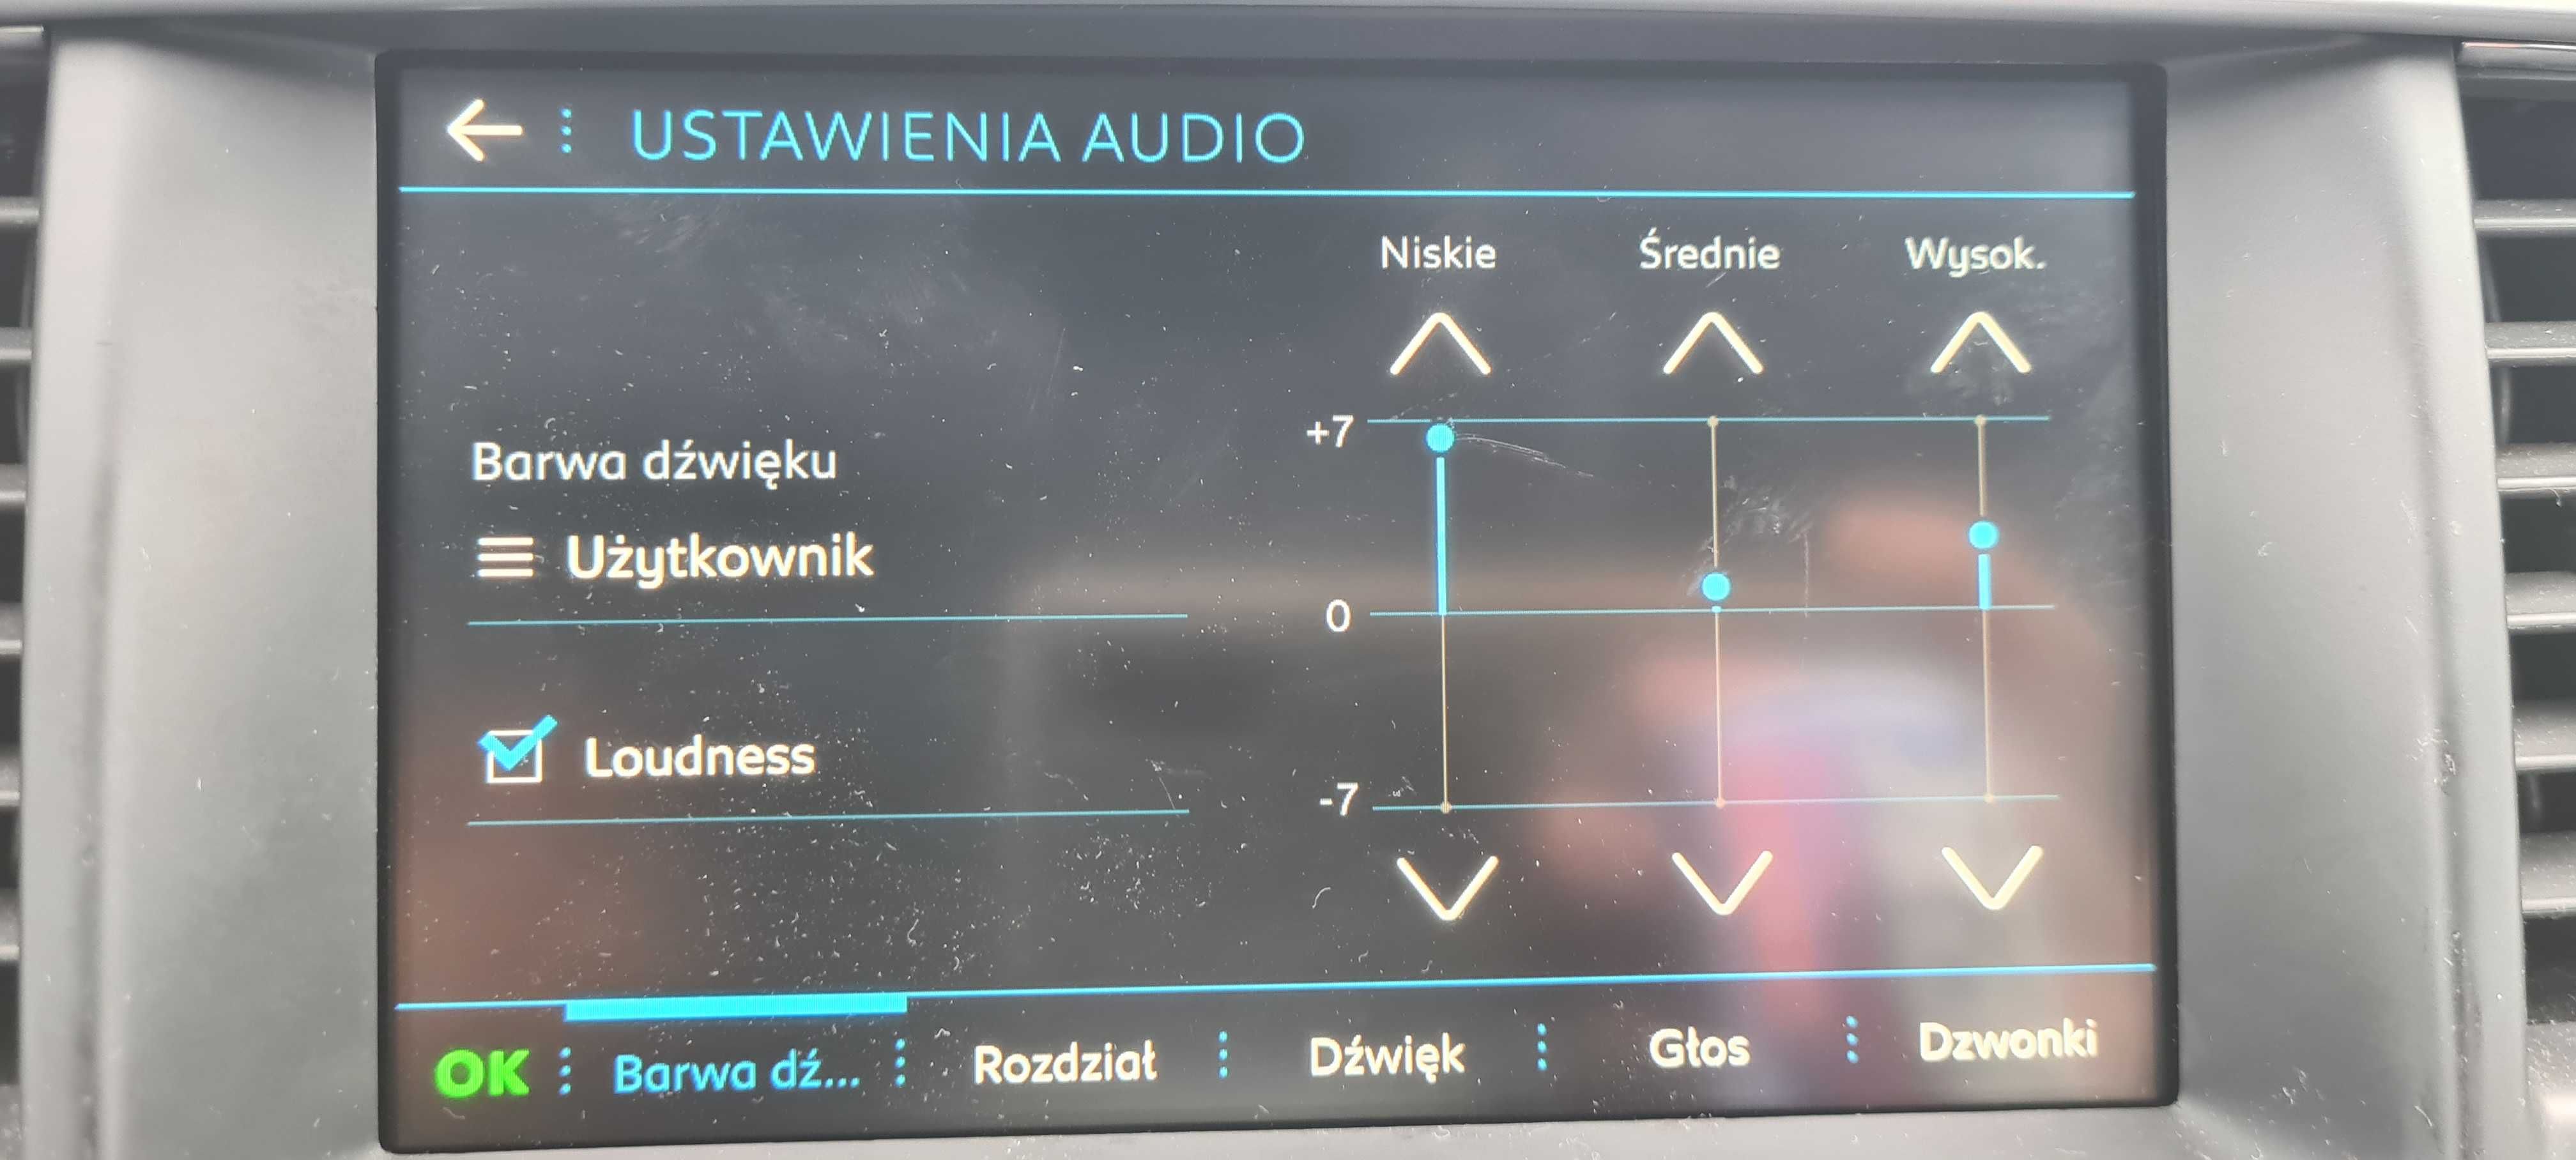 ZESTAW Radio NAC Citroen C4 Picasso - Android Auto / Carplay